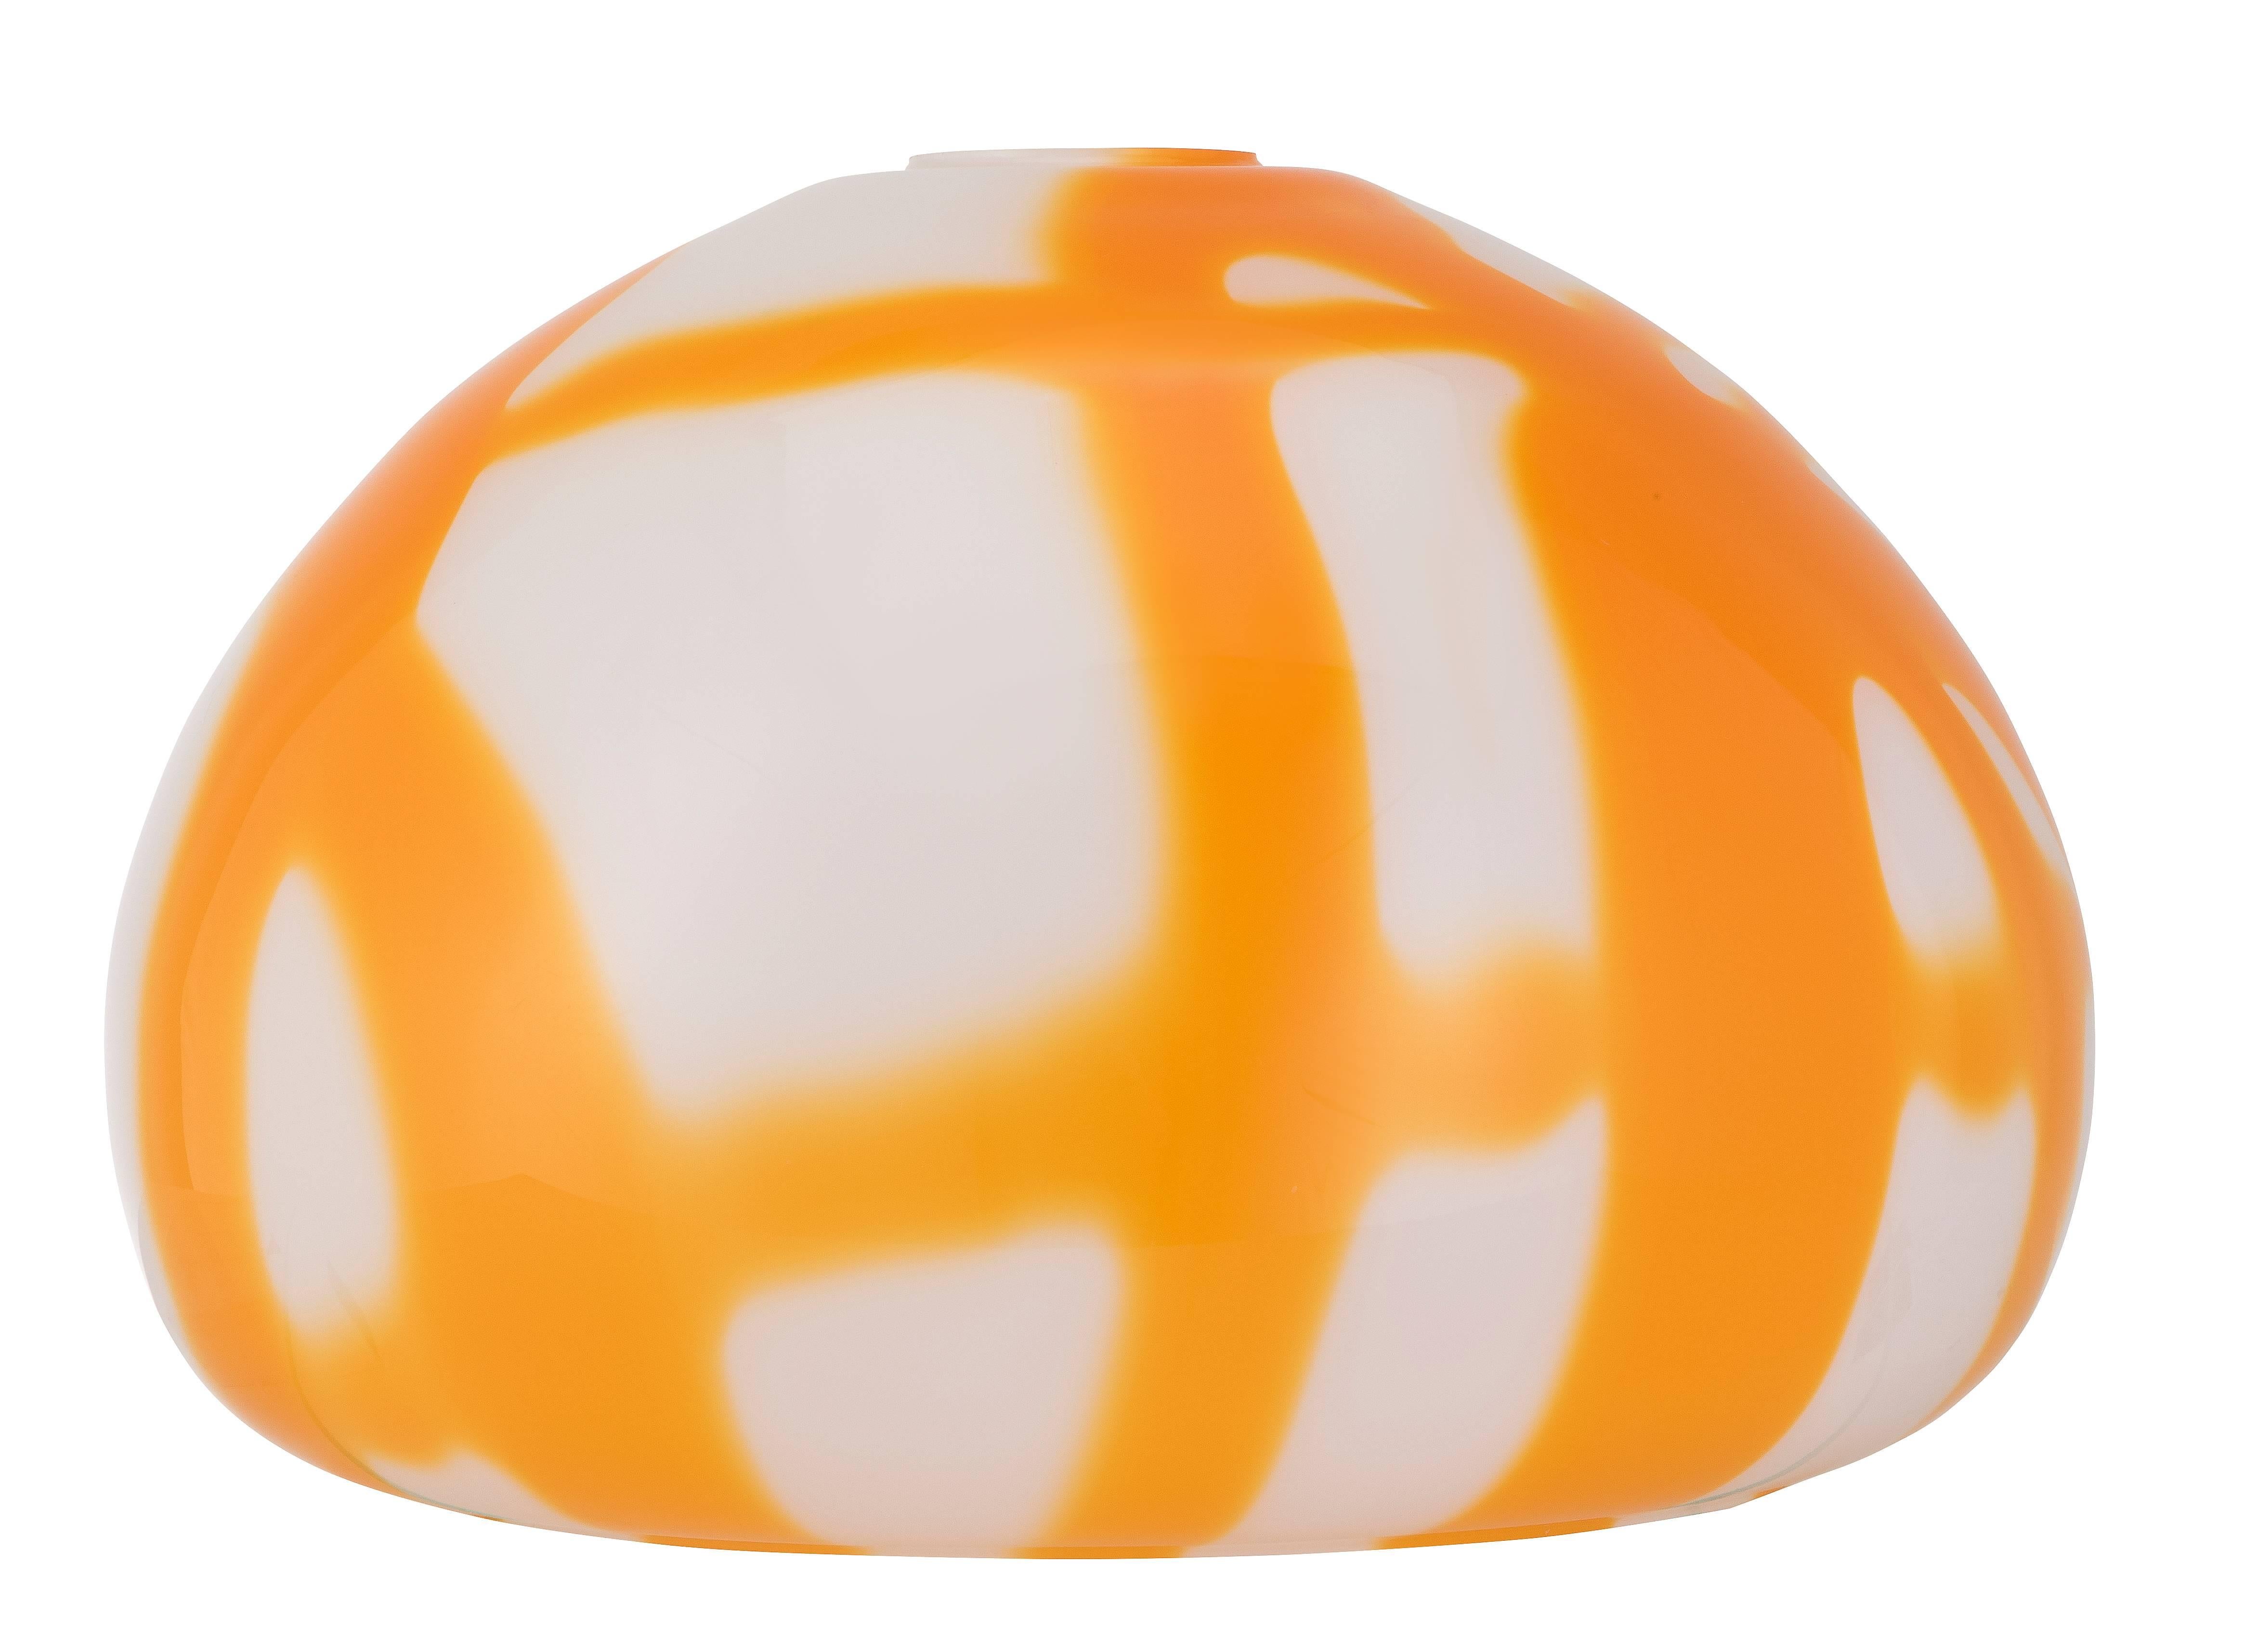 Handblown orange and white mushroom shaped Guzzini style glass pendant lamp.
Italy, circa 1950s.